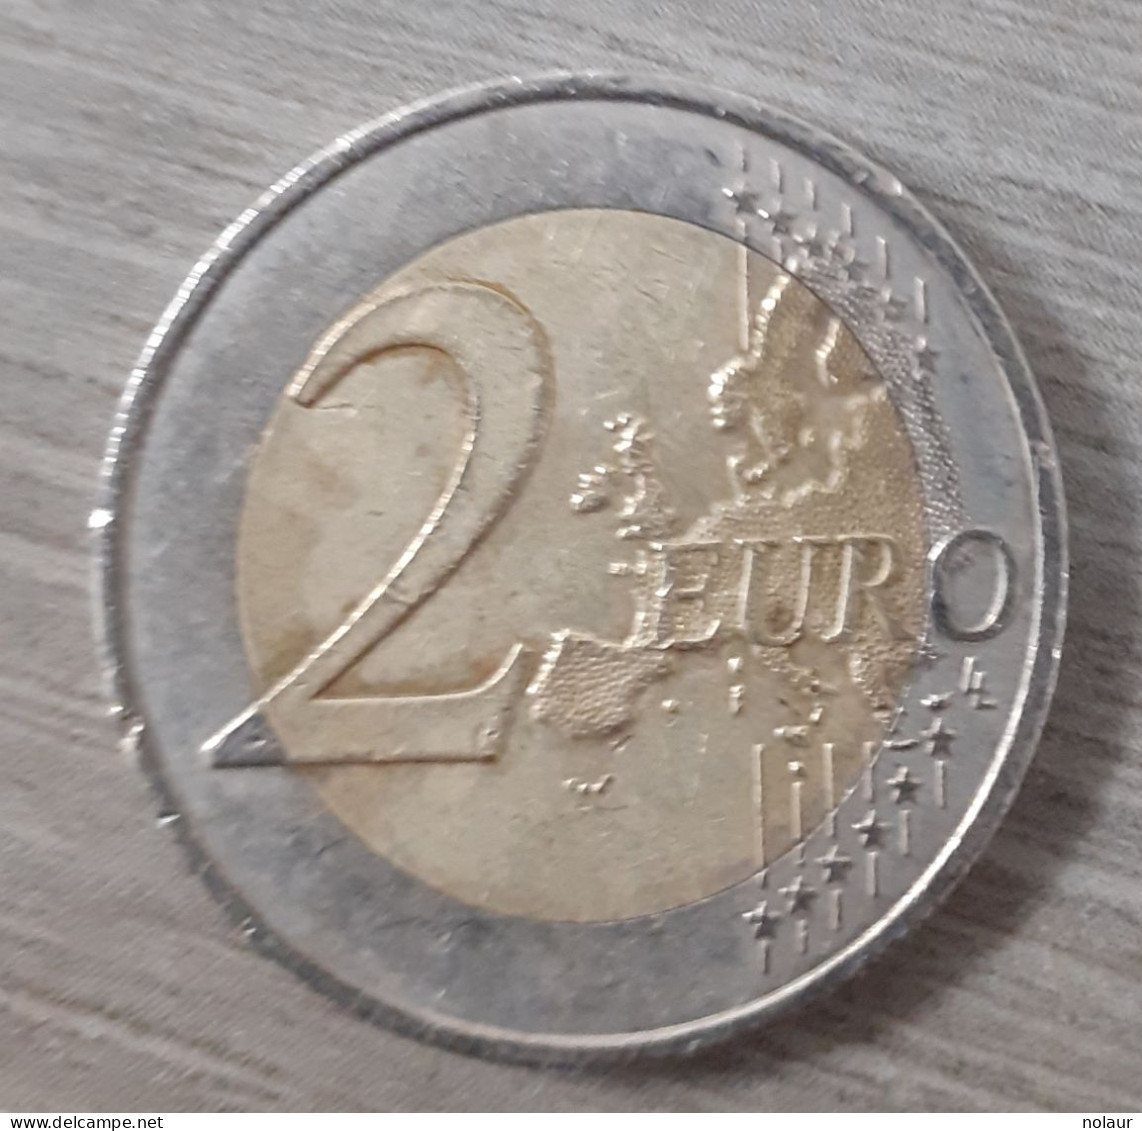 PIECE COMMEMORATIVE 2 EUROS - François Miterrand - France